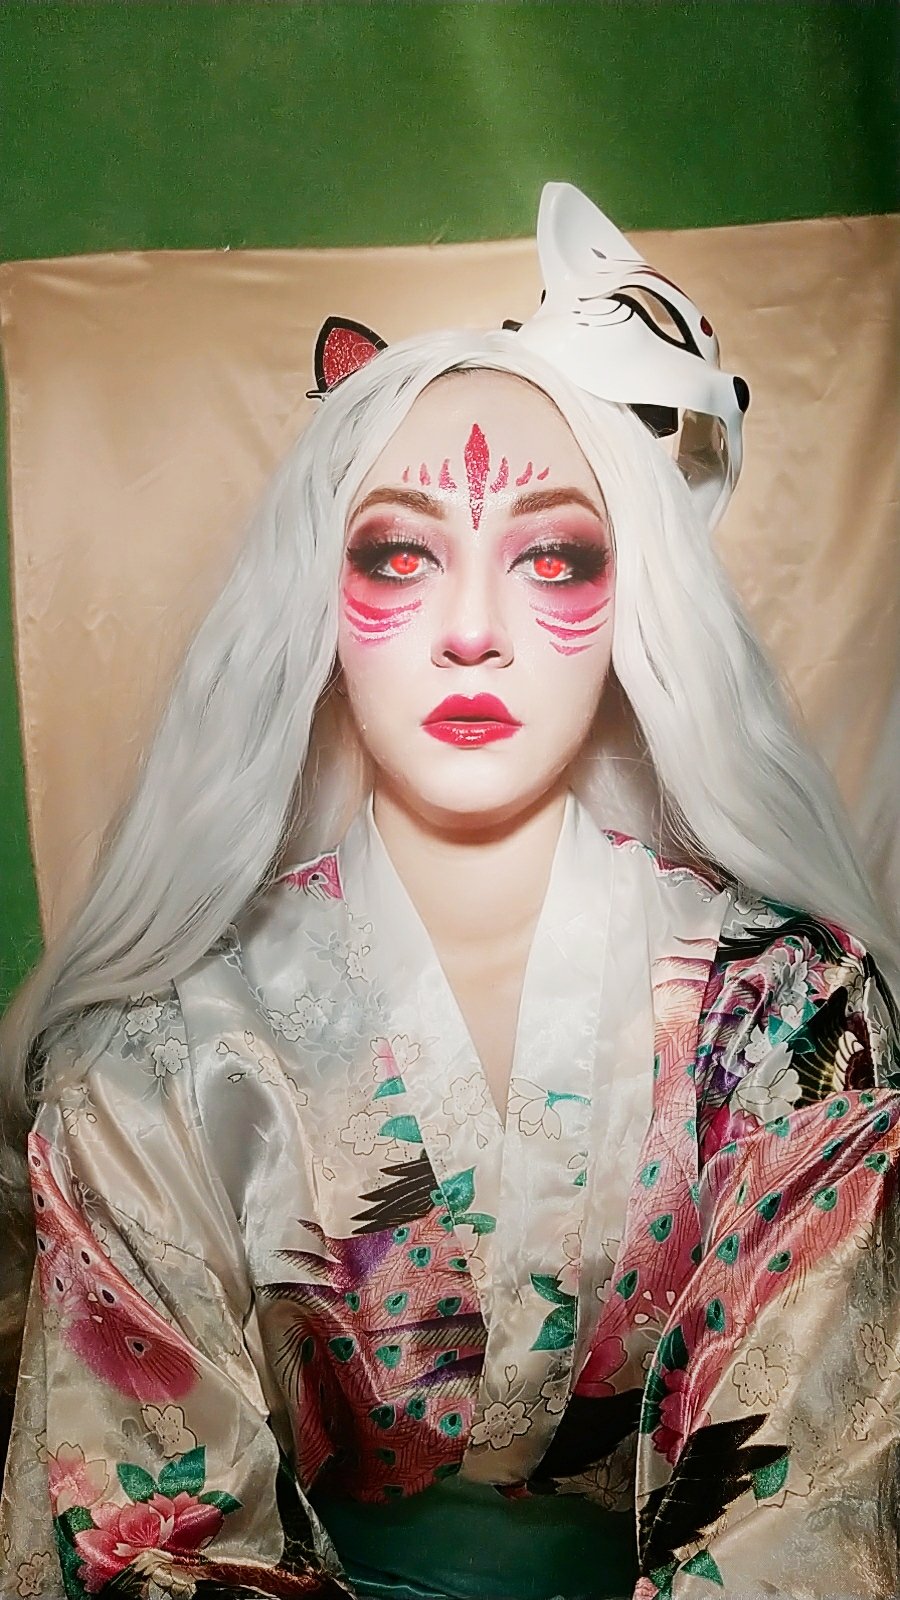 Hyo Cosplay on Twitter: "Kitsune💮🦊 make up hope you like it. You help me following me✨💖 #kitsune #makeup #cosplayergirl #cosplay https://t.co/qhMMQkHoXu" Twitter